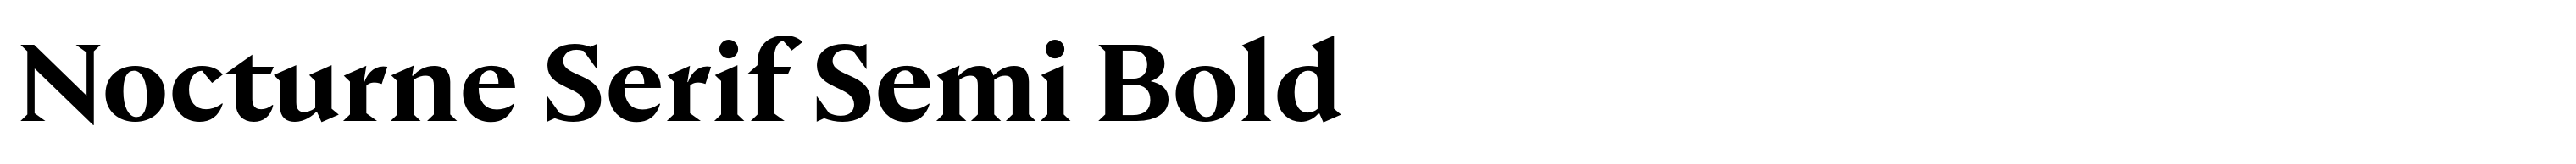 Nocturne Serif Semi Bold